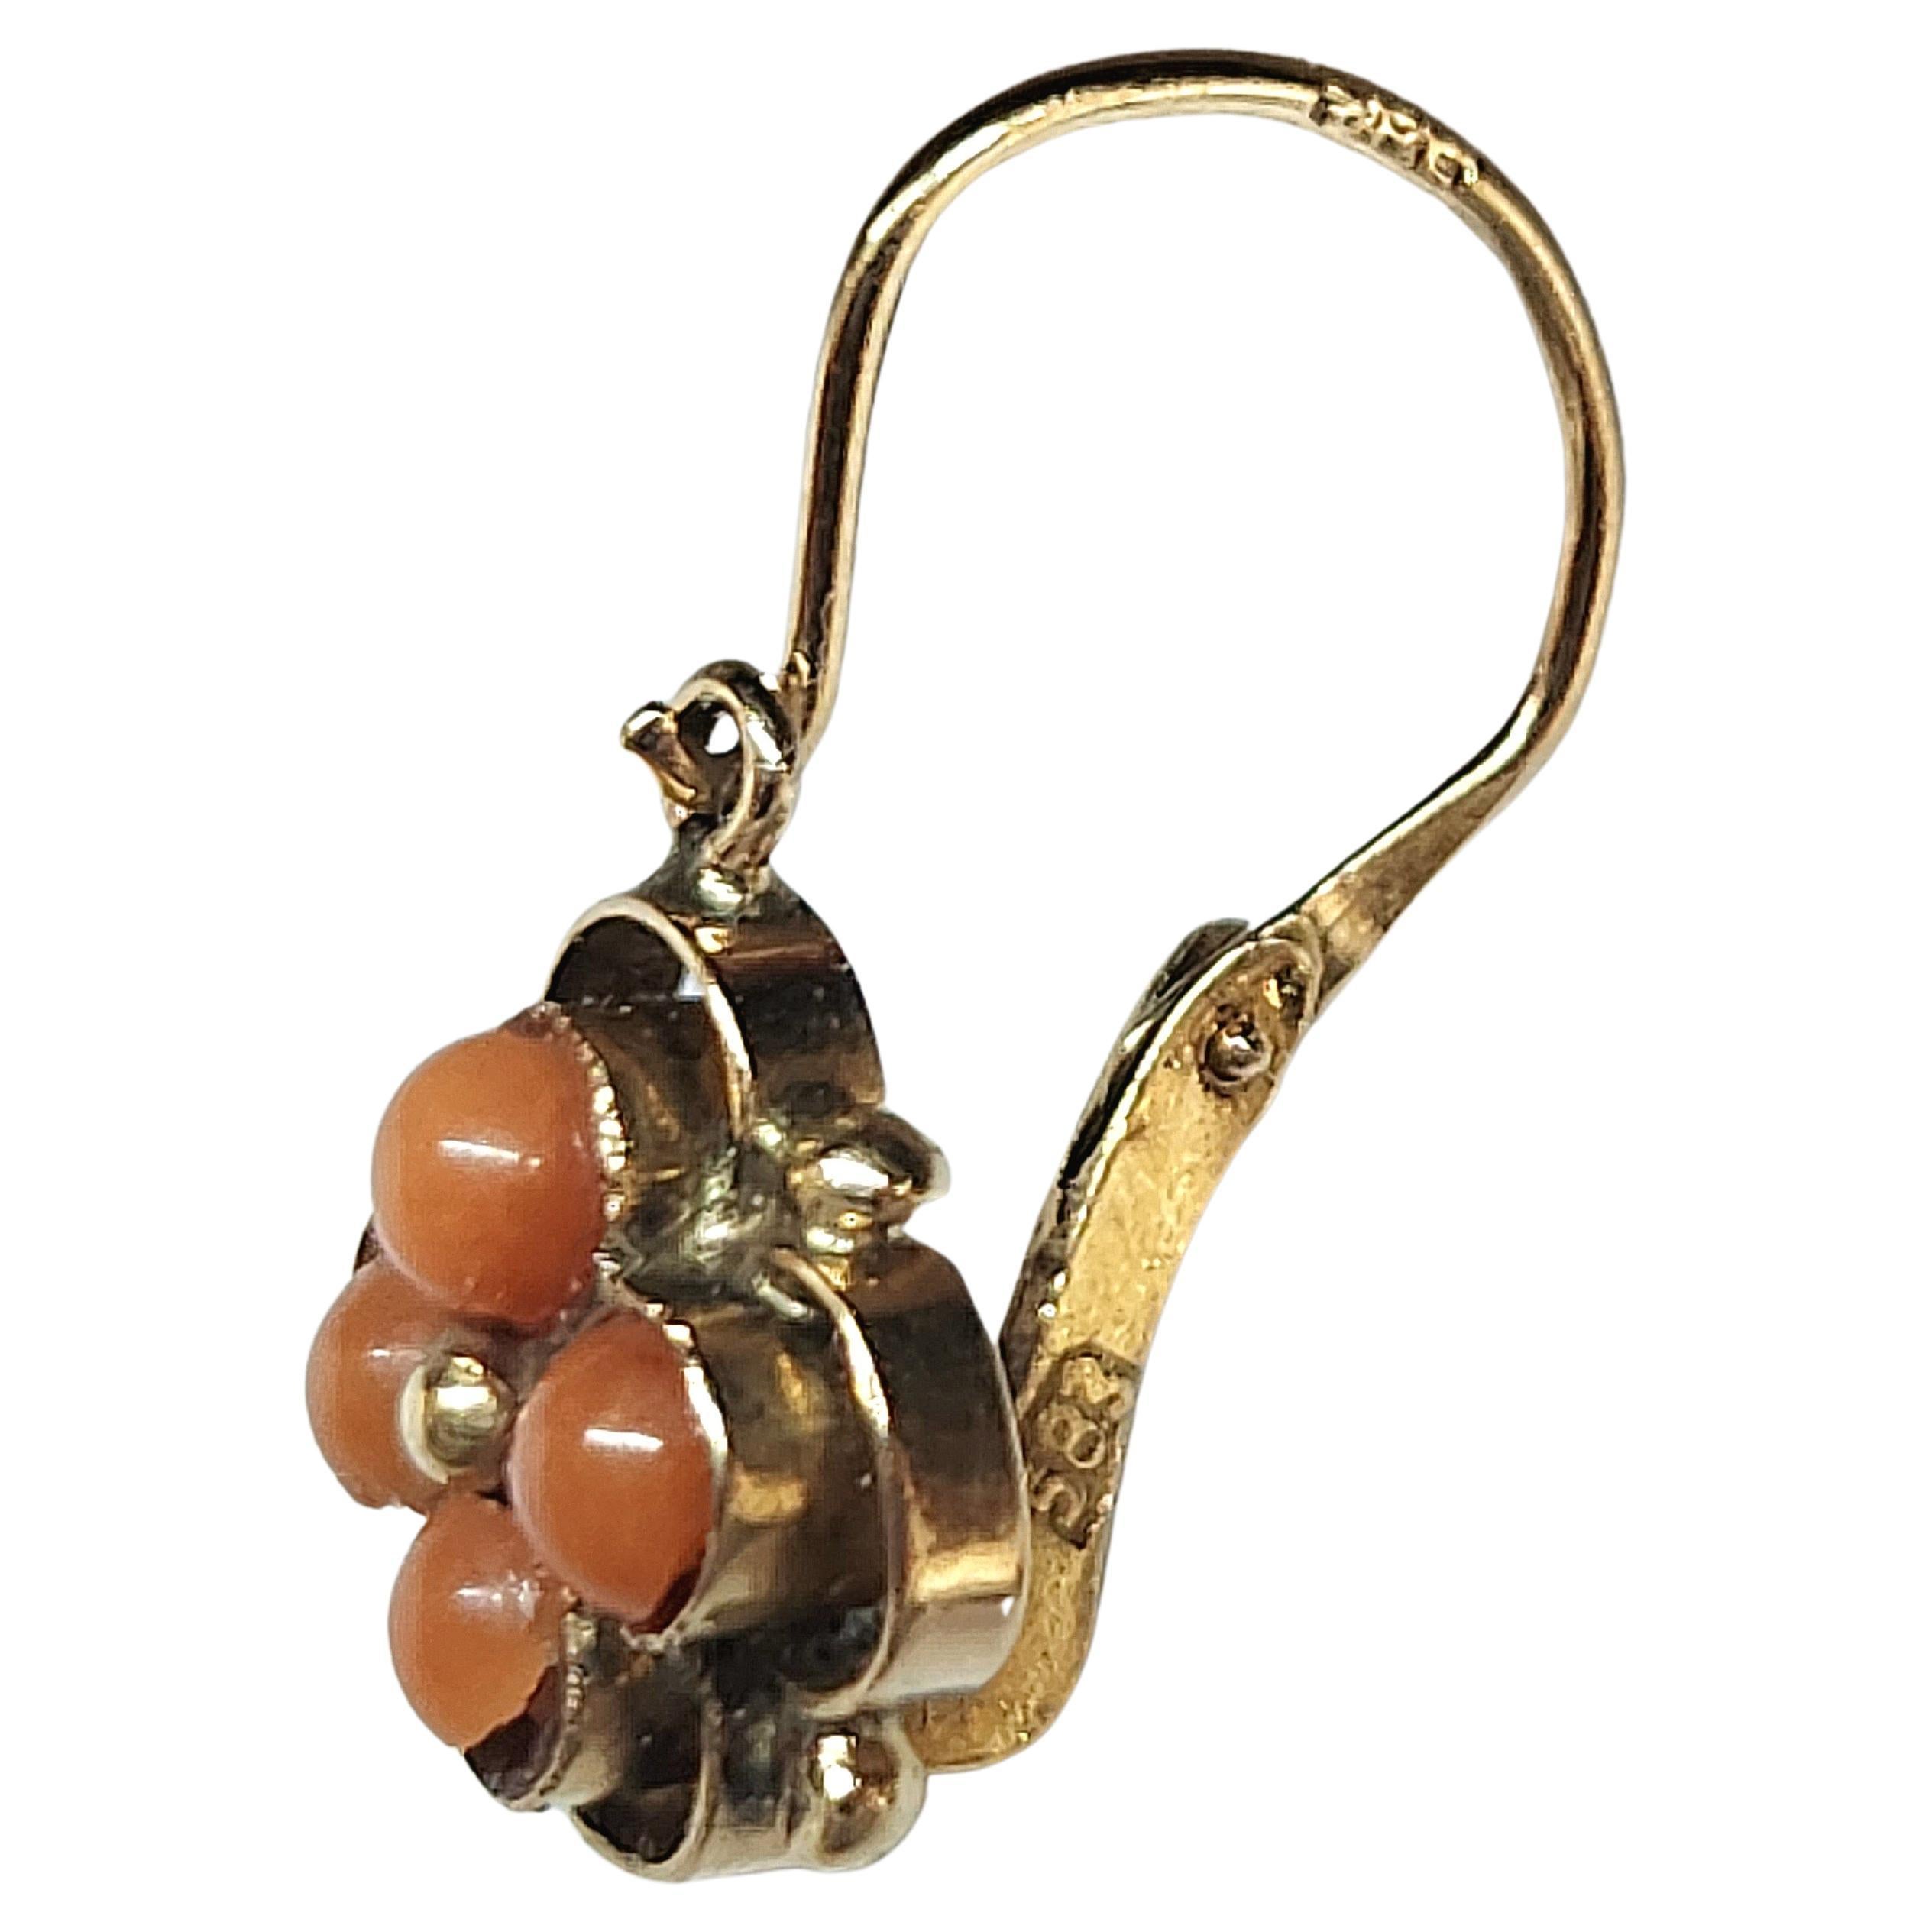 antique 14k gold earrings